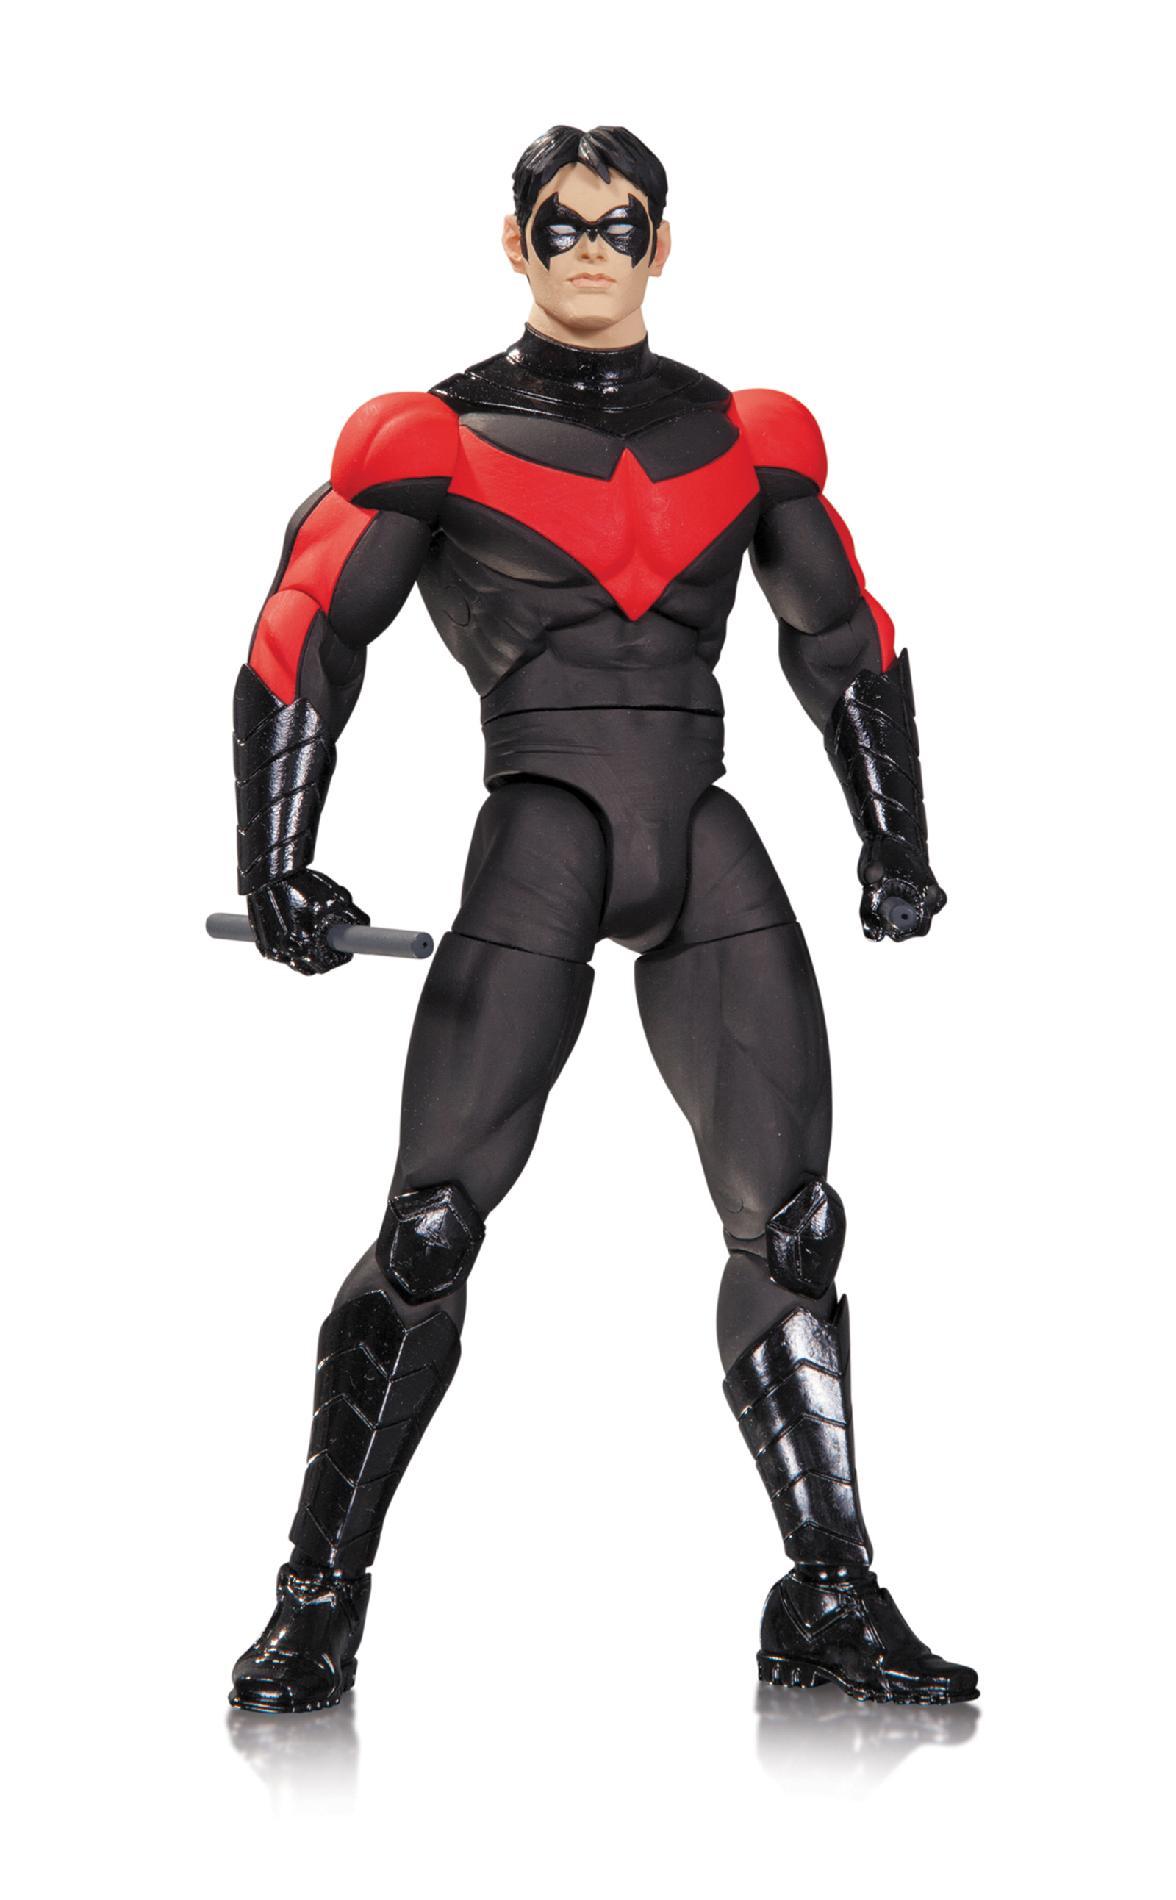 Designer Series 1 Greg Capullo Nightwing Action Figure